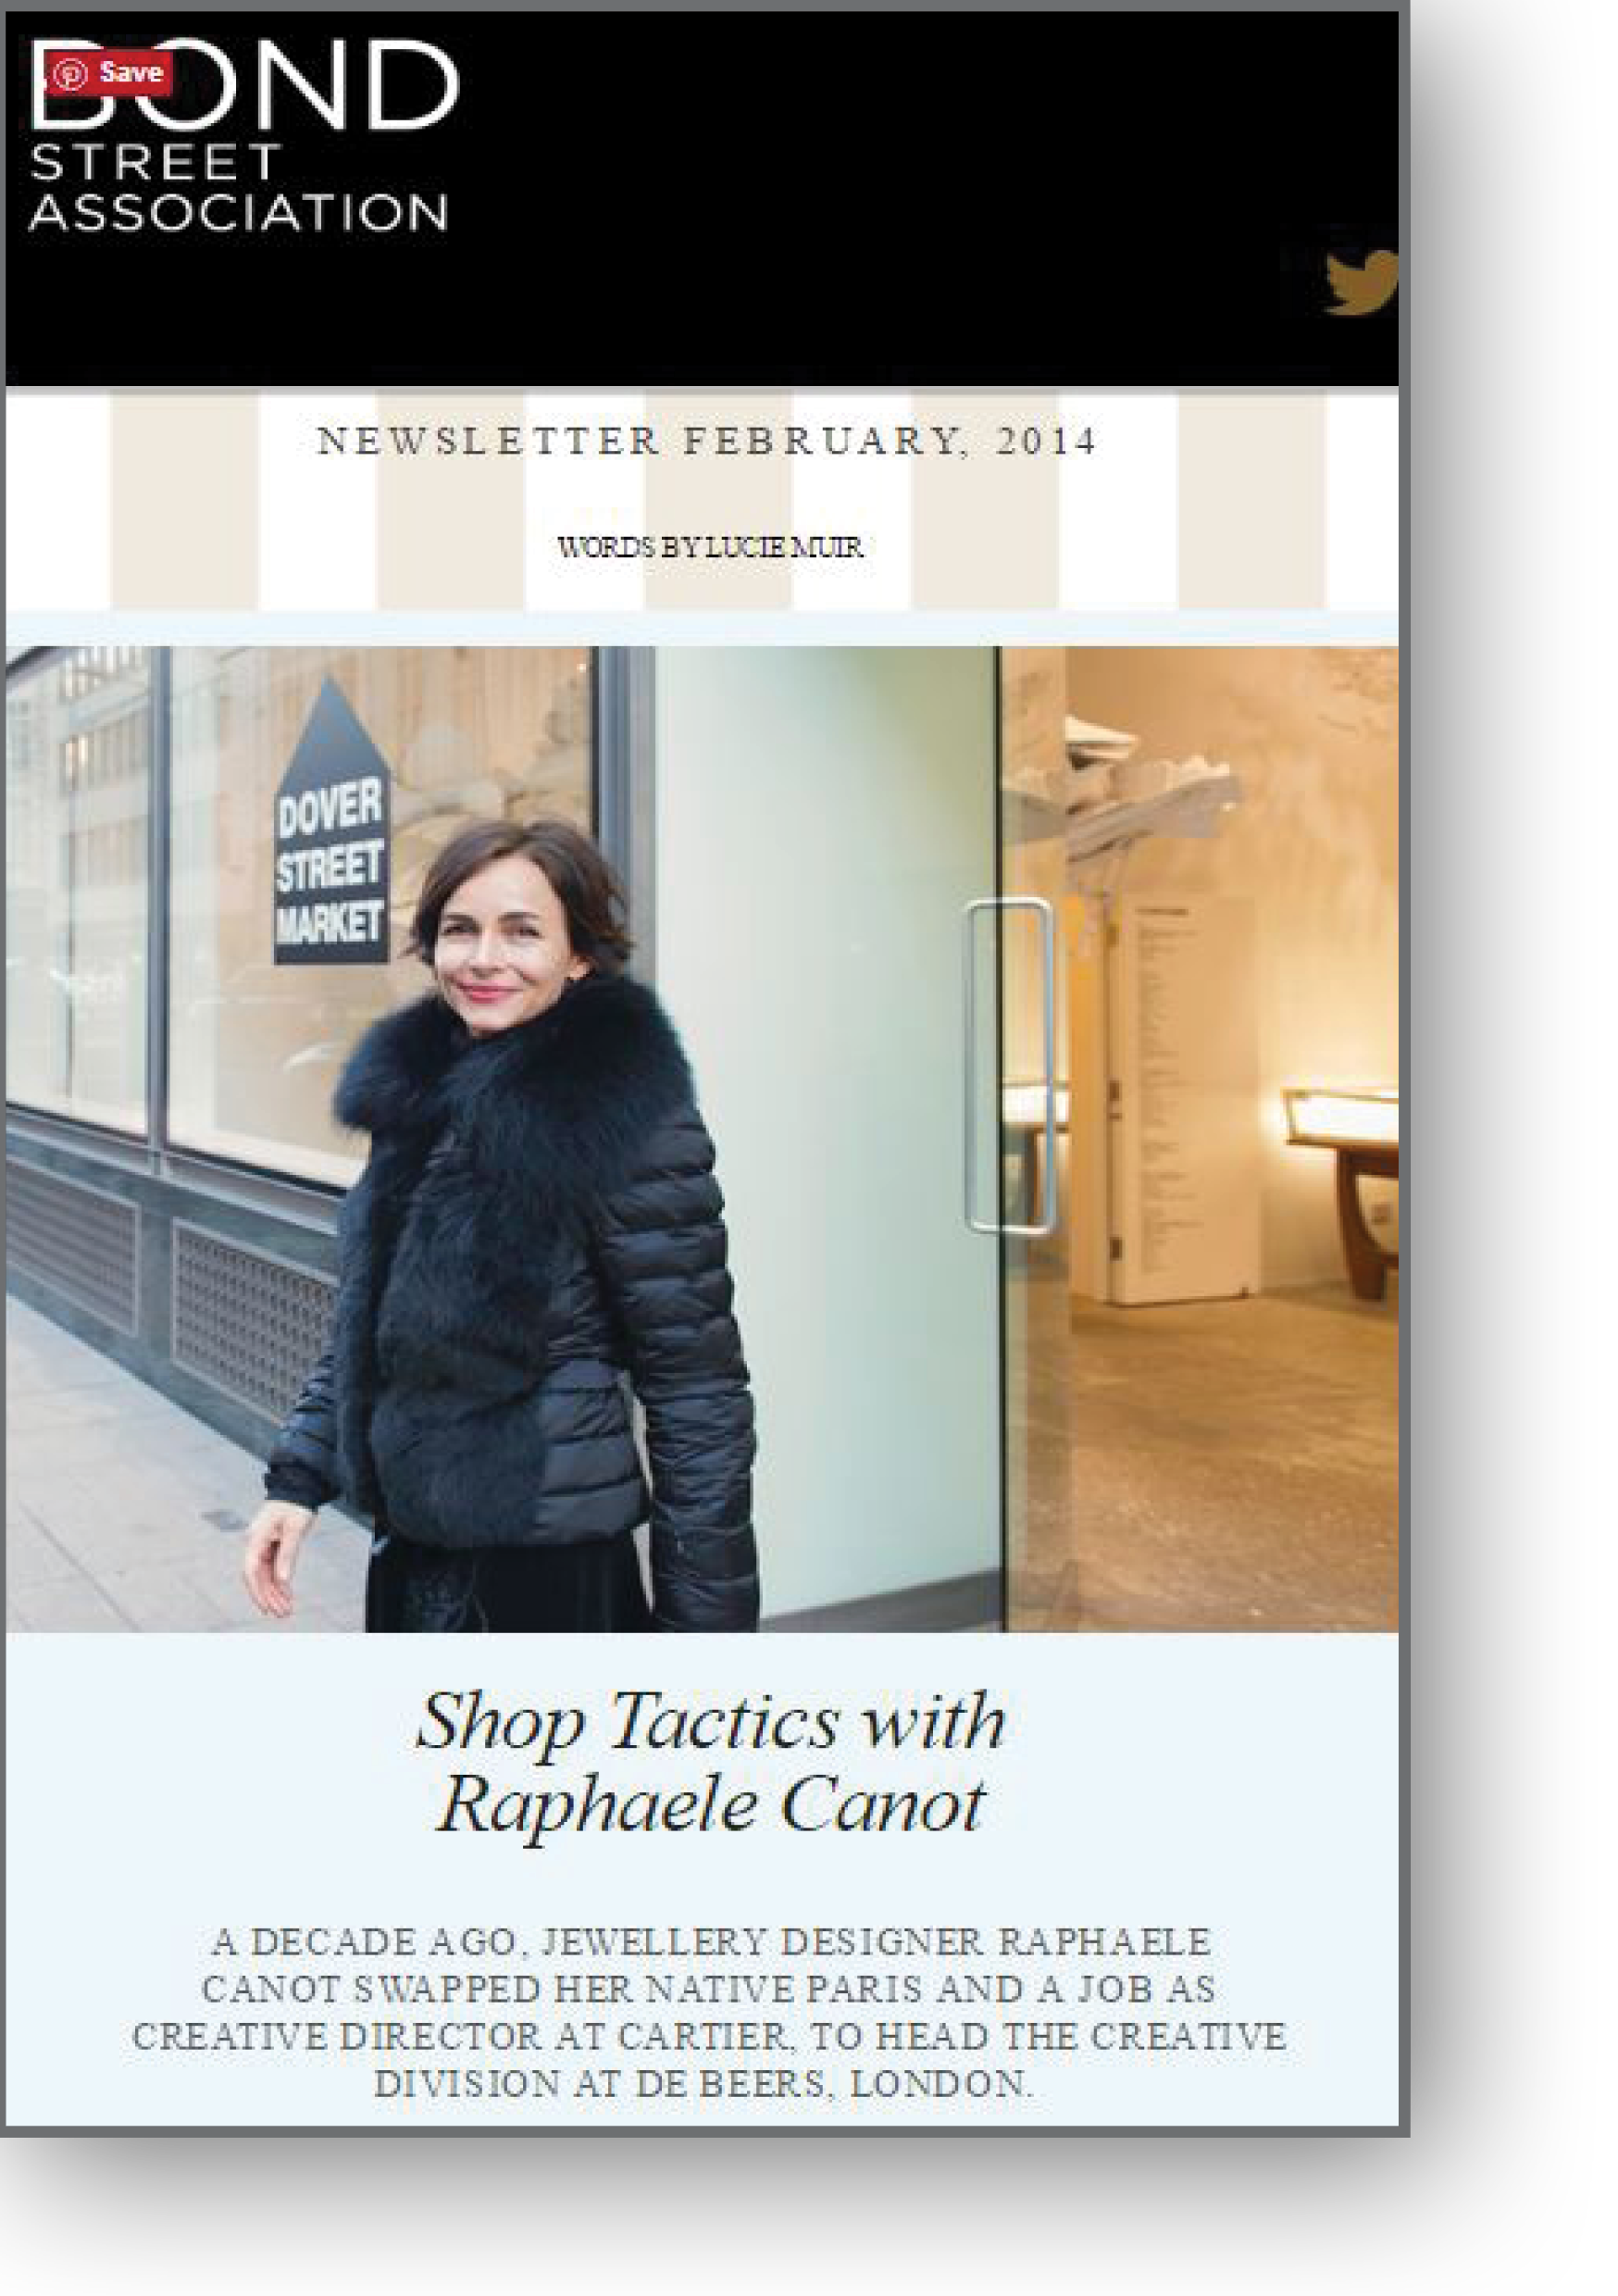 Shop tactics with Raphaele Canot